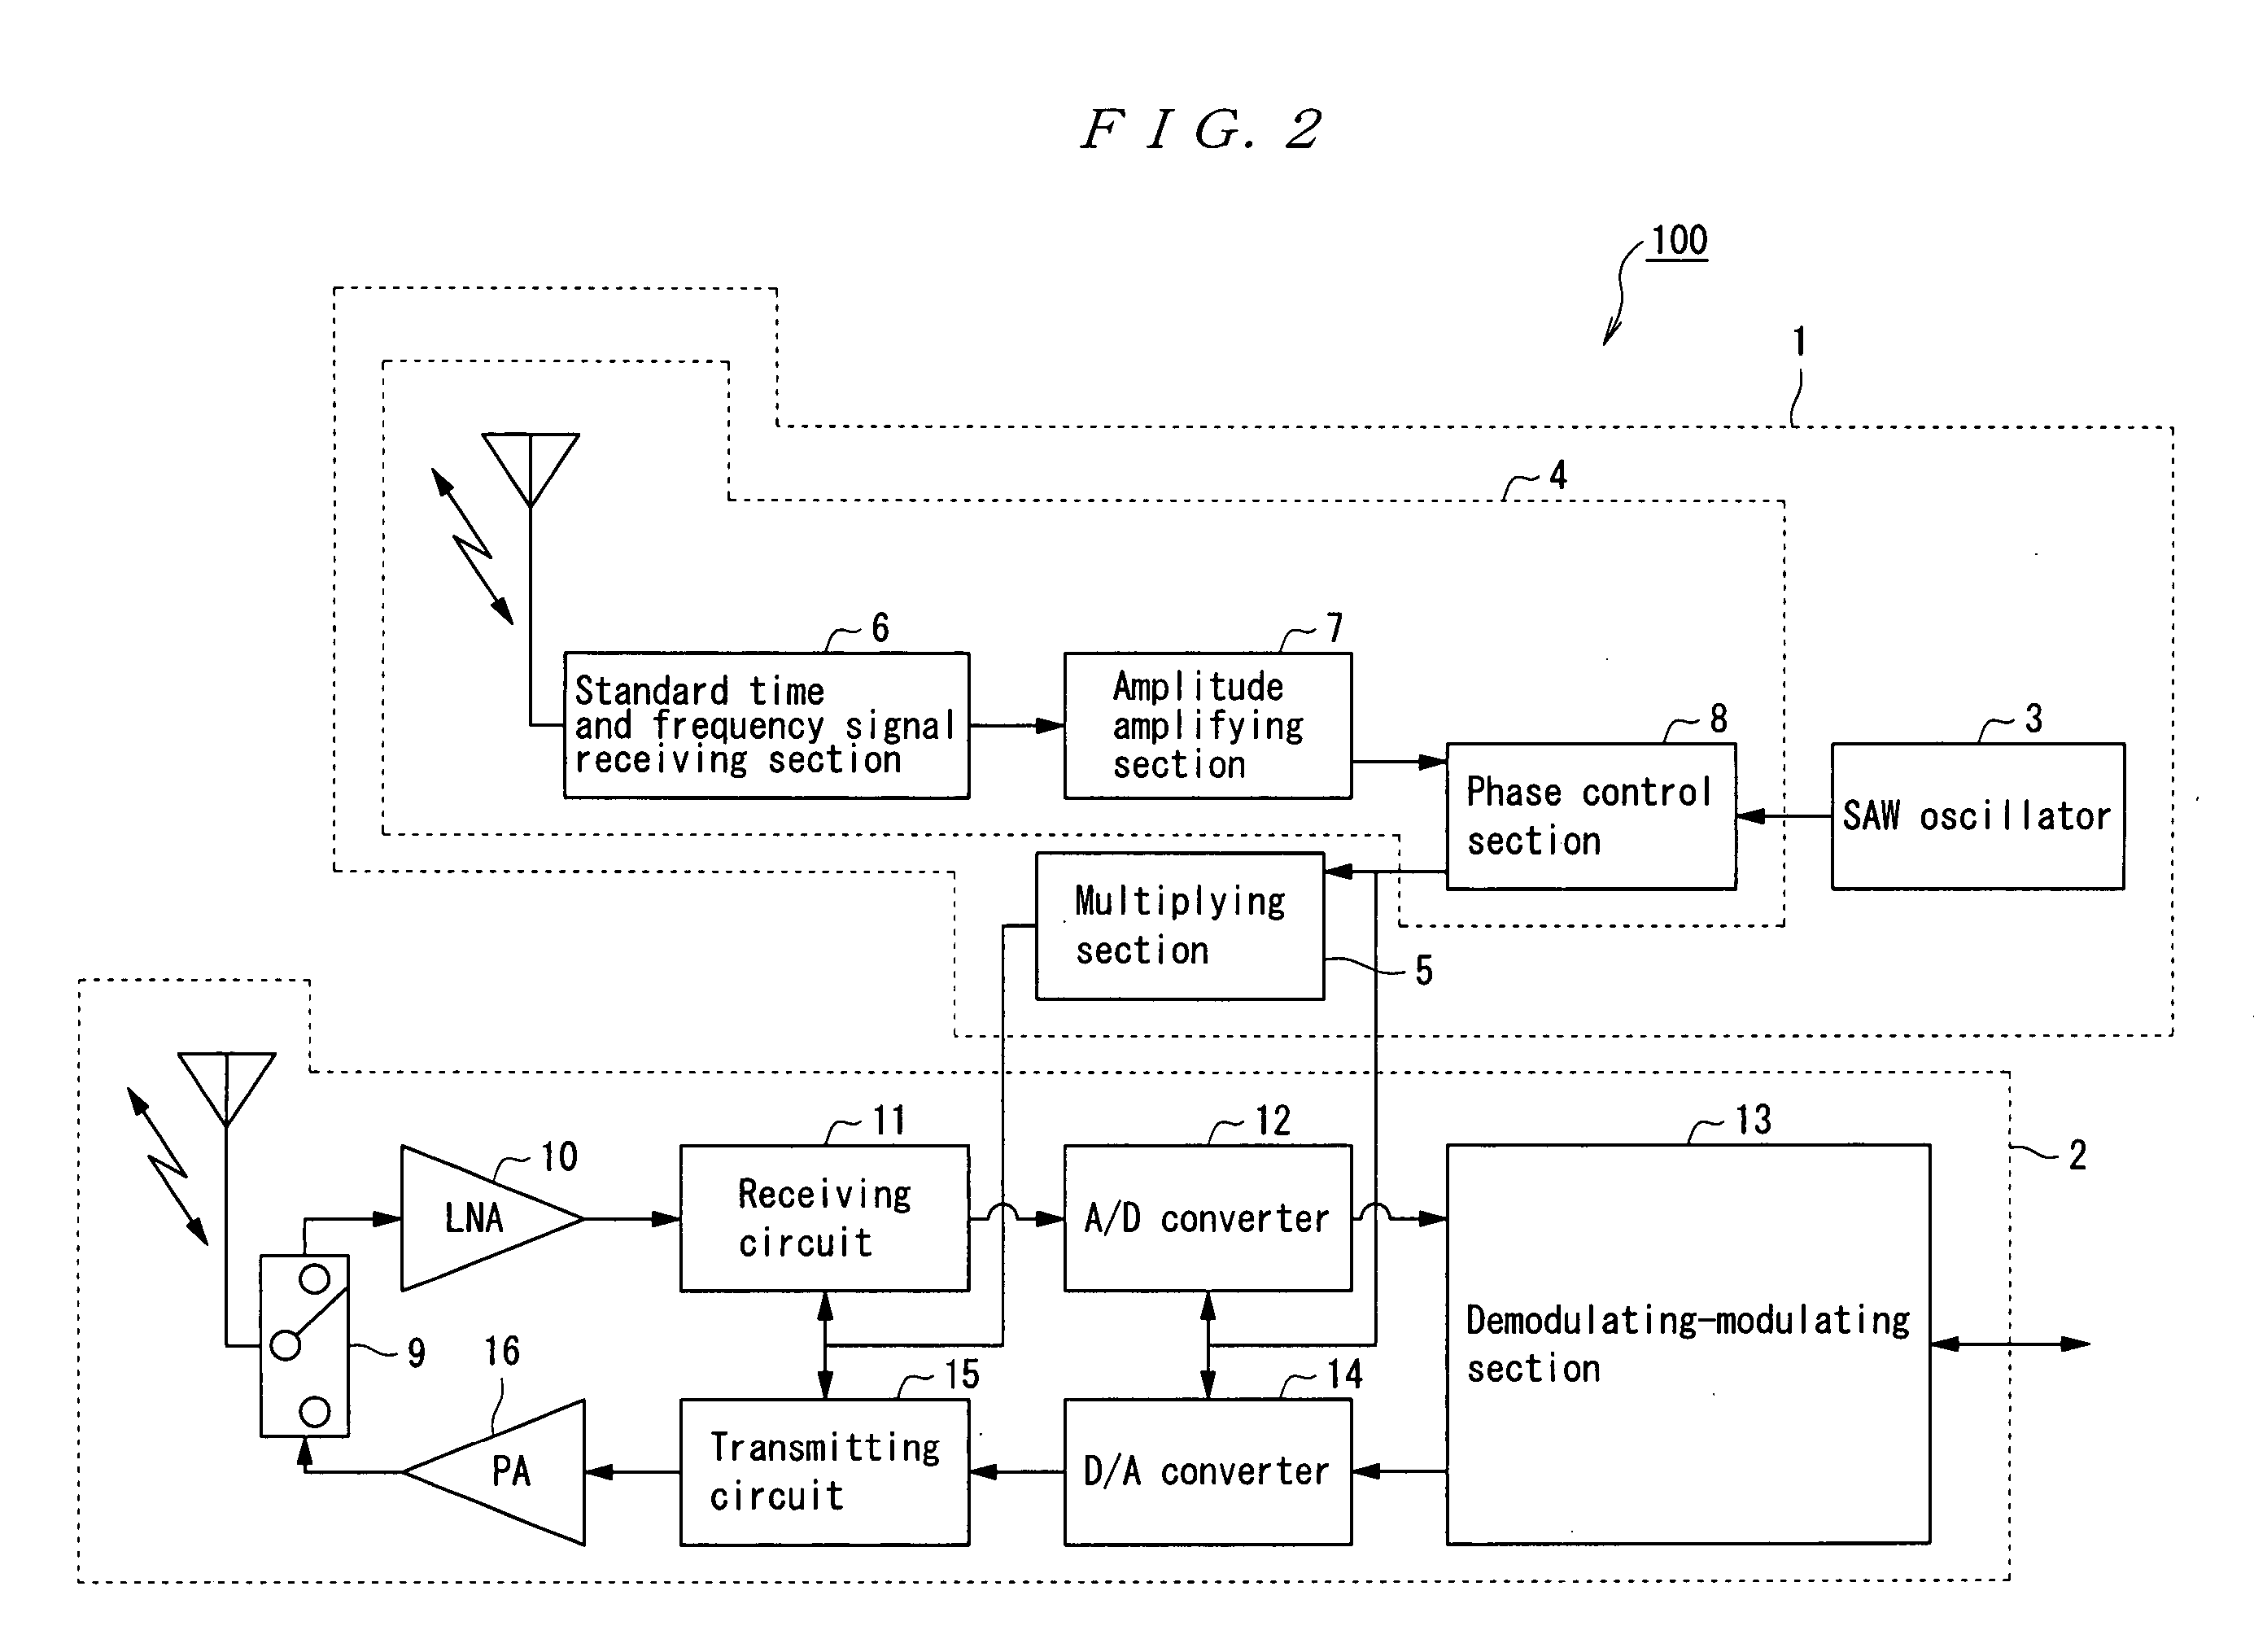 Clock signal correcting circuit and communicating apparatus